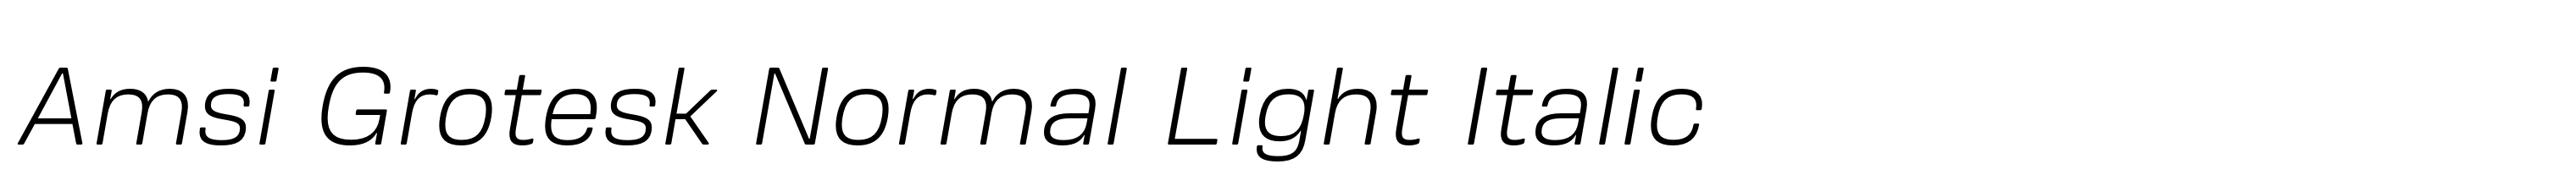 Amsi Grotesk Normal Light Italic